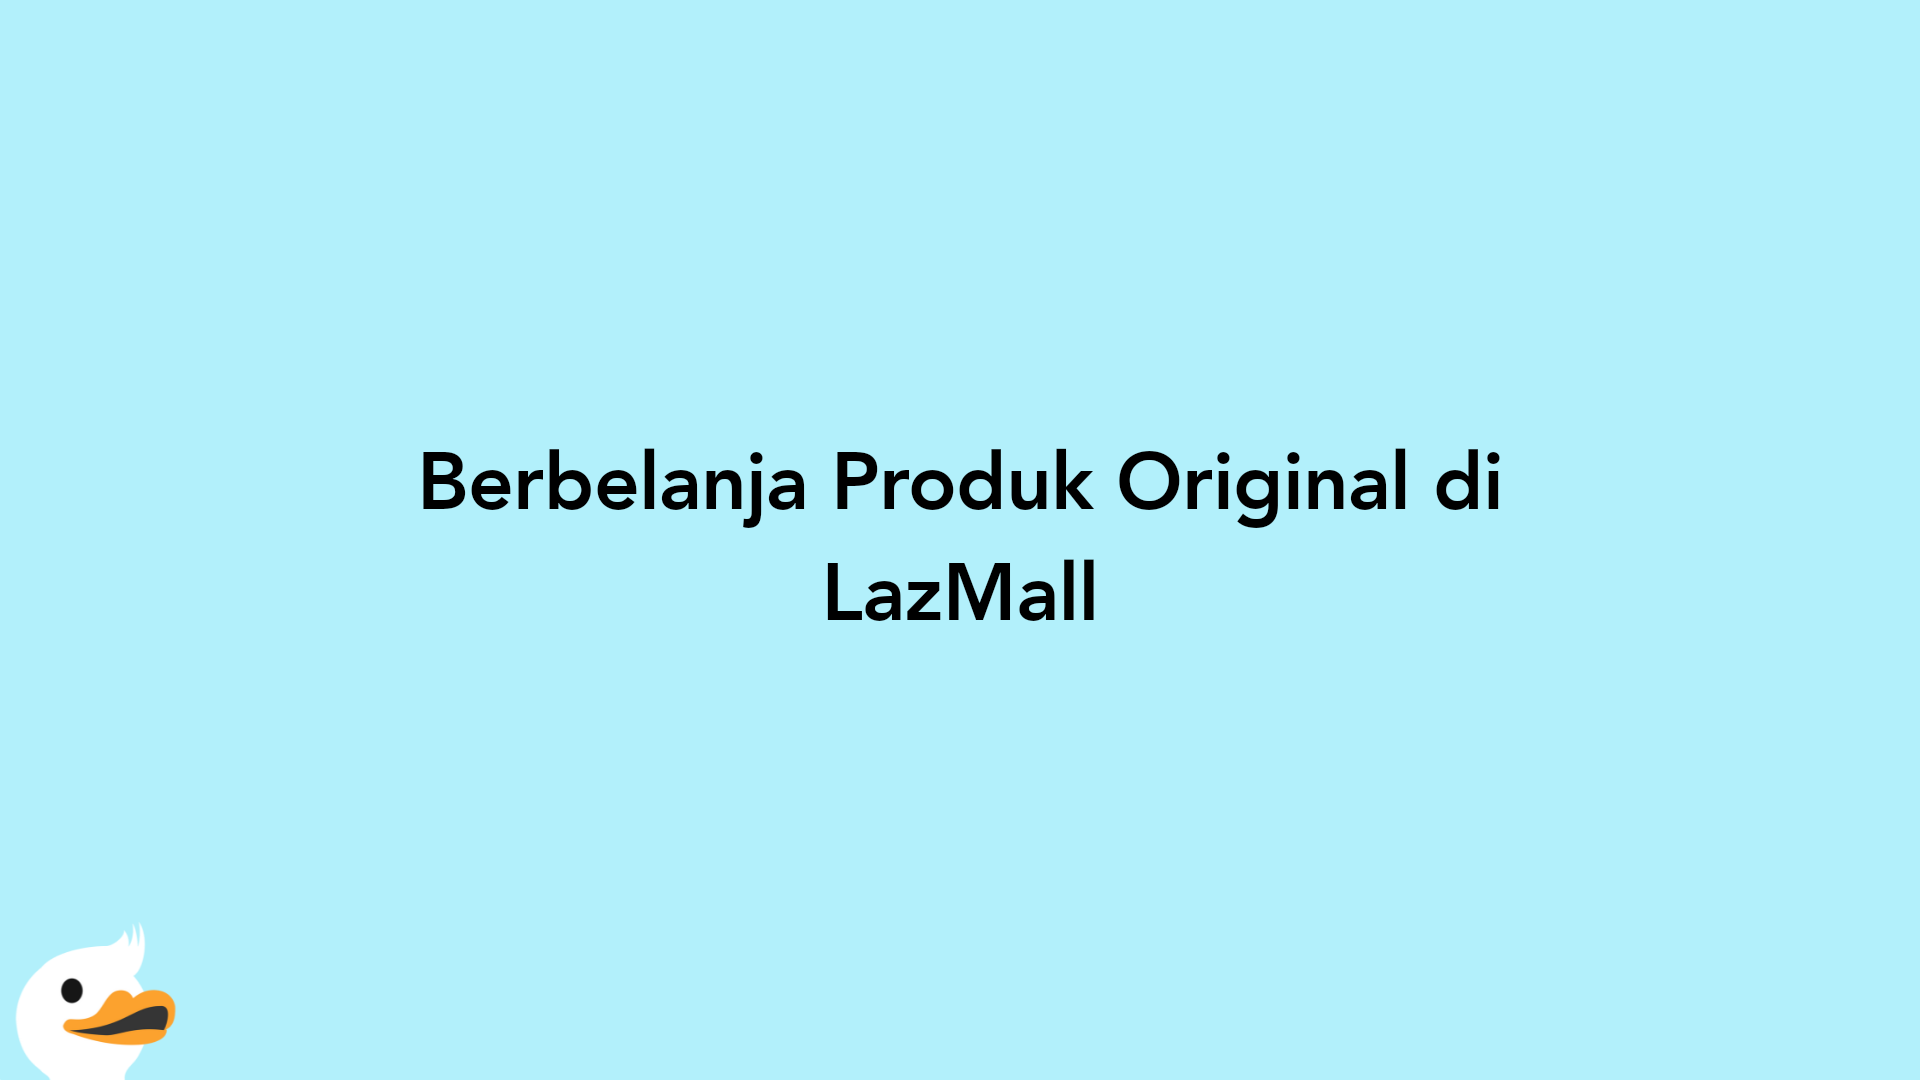 Berbelanja Produk Original di LazMall